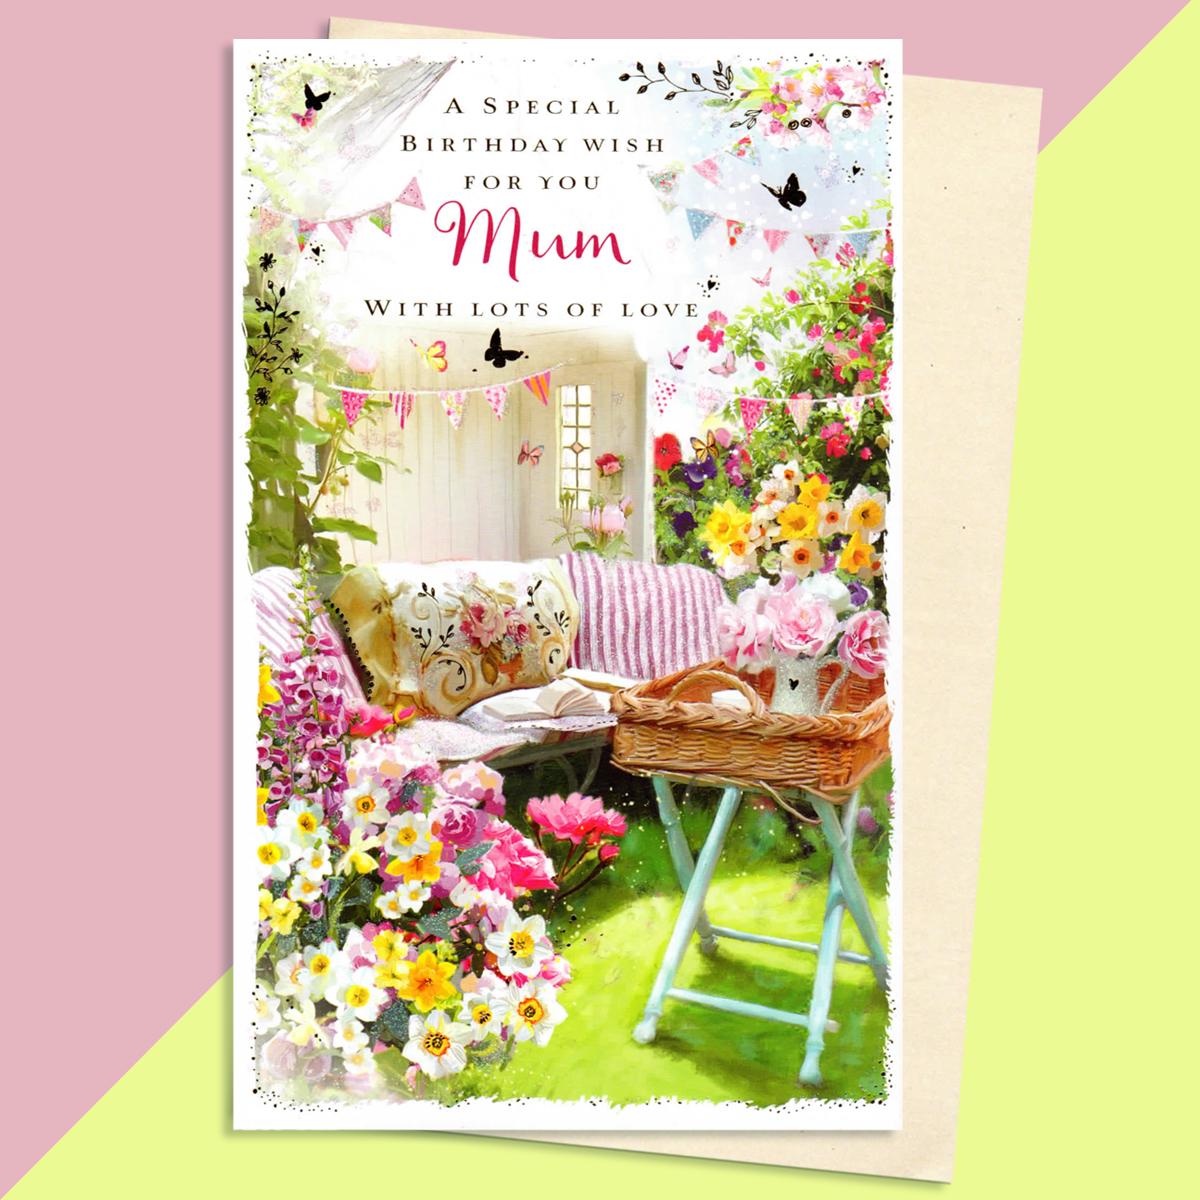 Mum Summer House Birthday Card Sitting On A Display Shelf